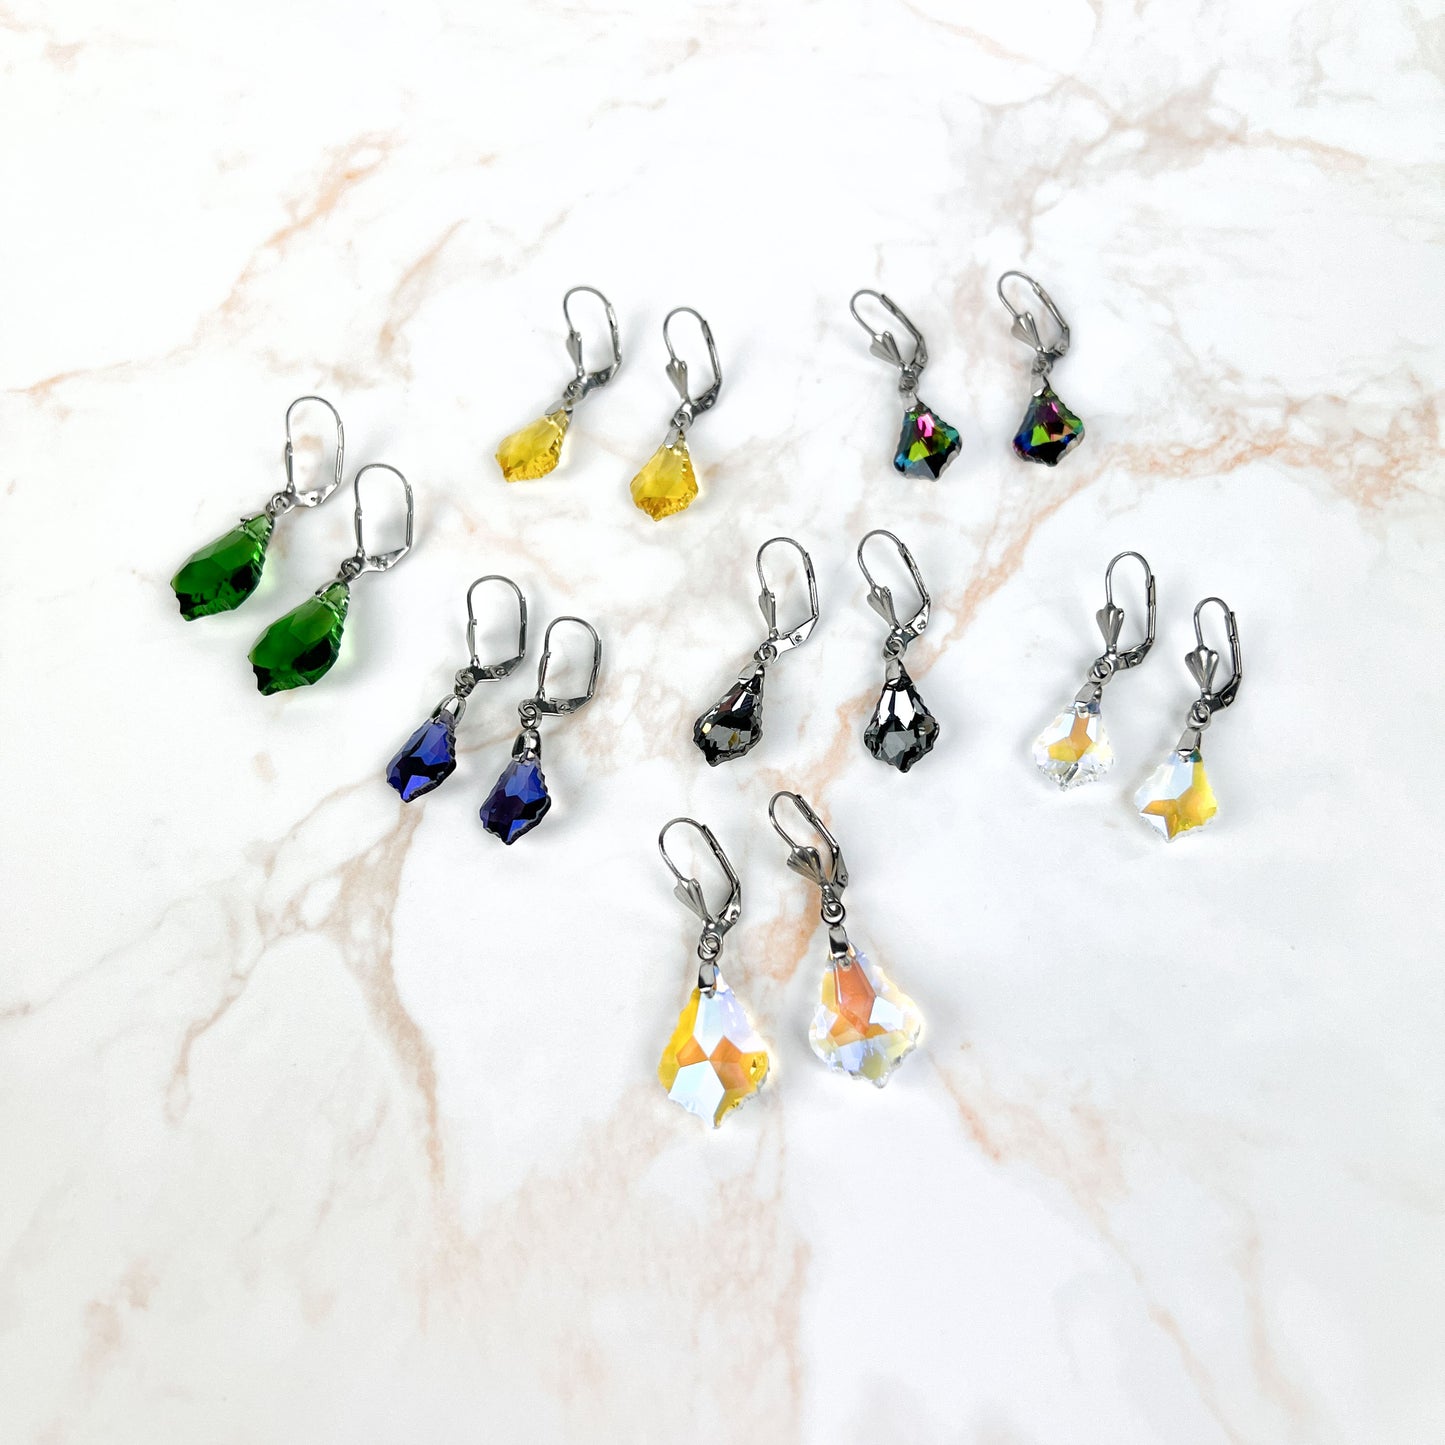 Crystal sparkling earrings, Art Deco stainless steel closures